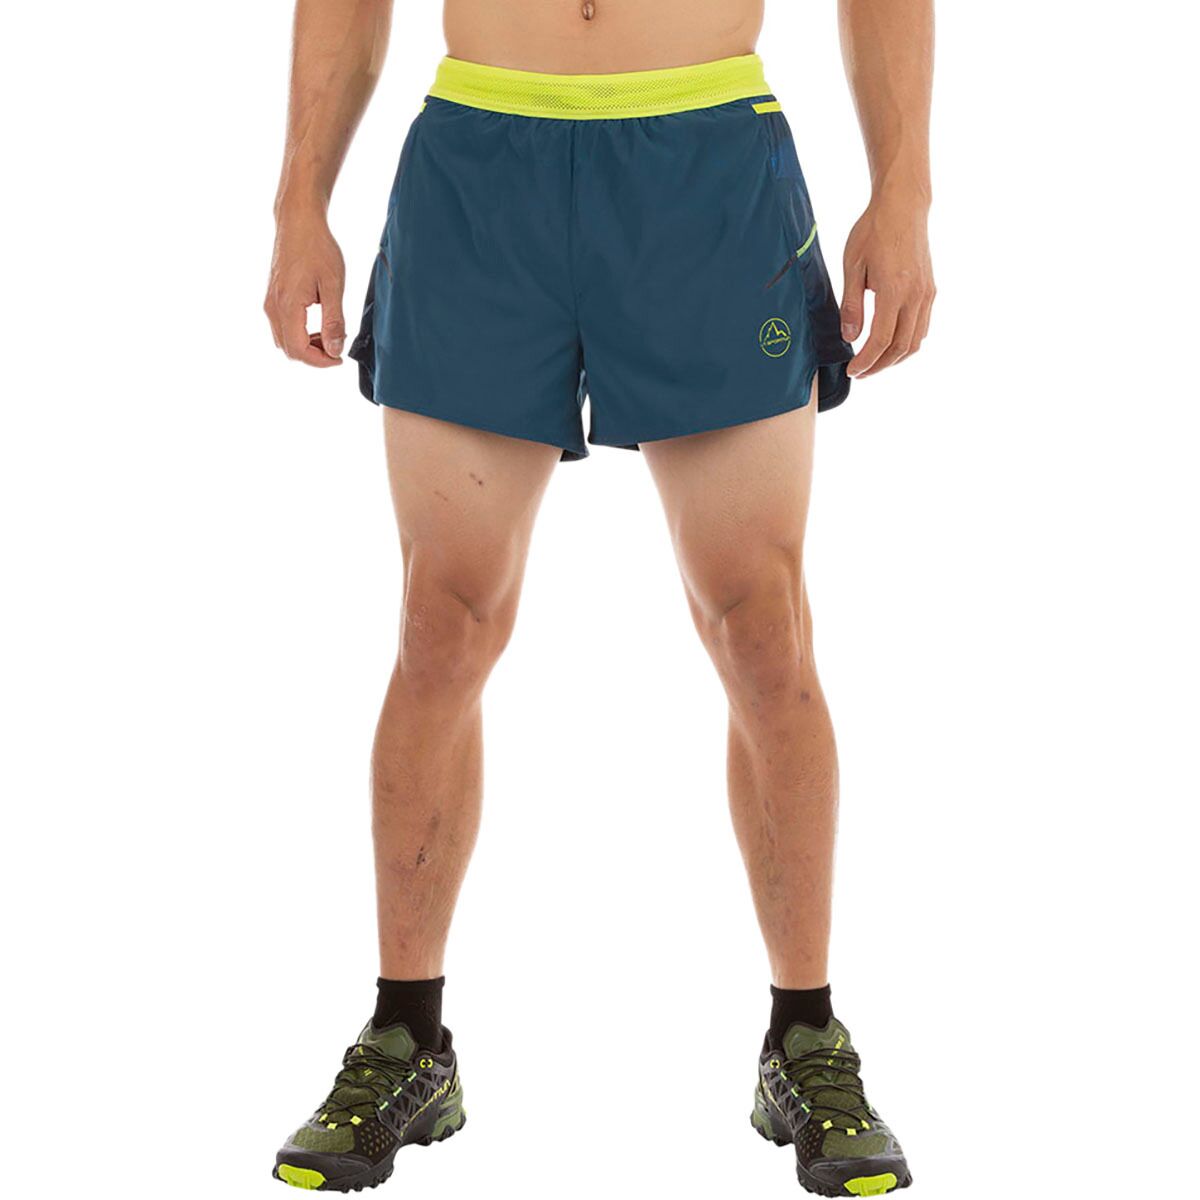 La Sportiva Auster Short - Men's